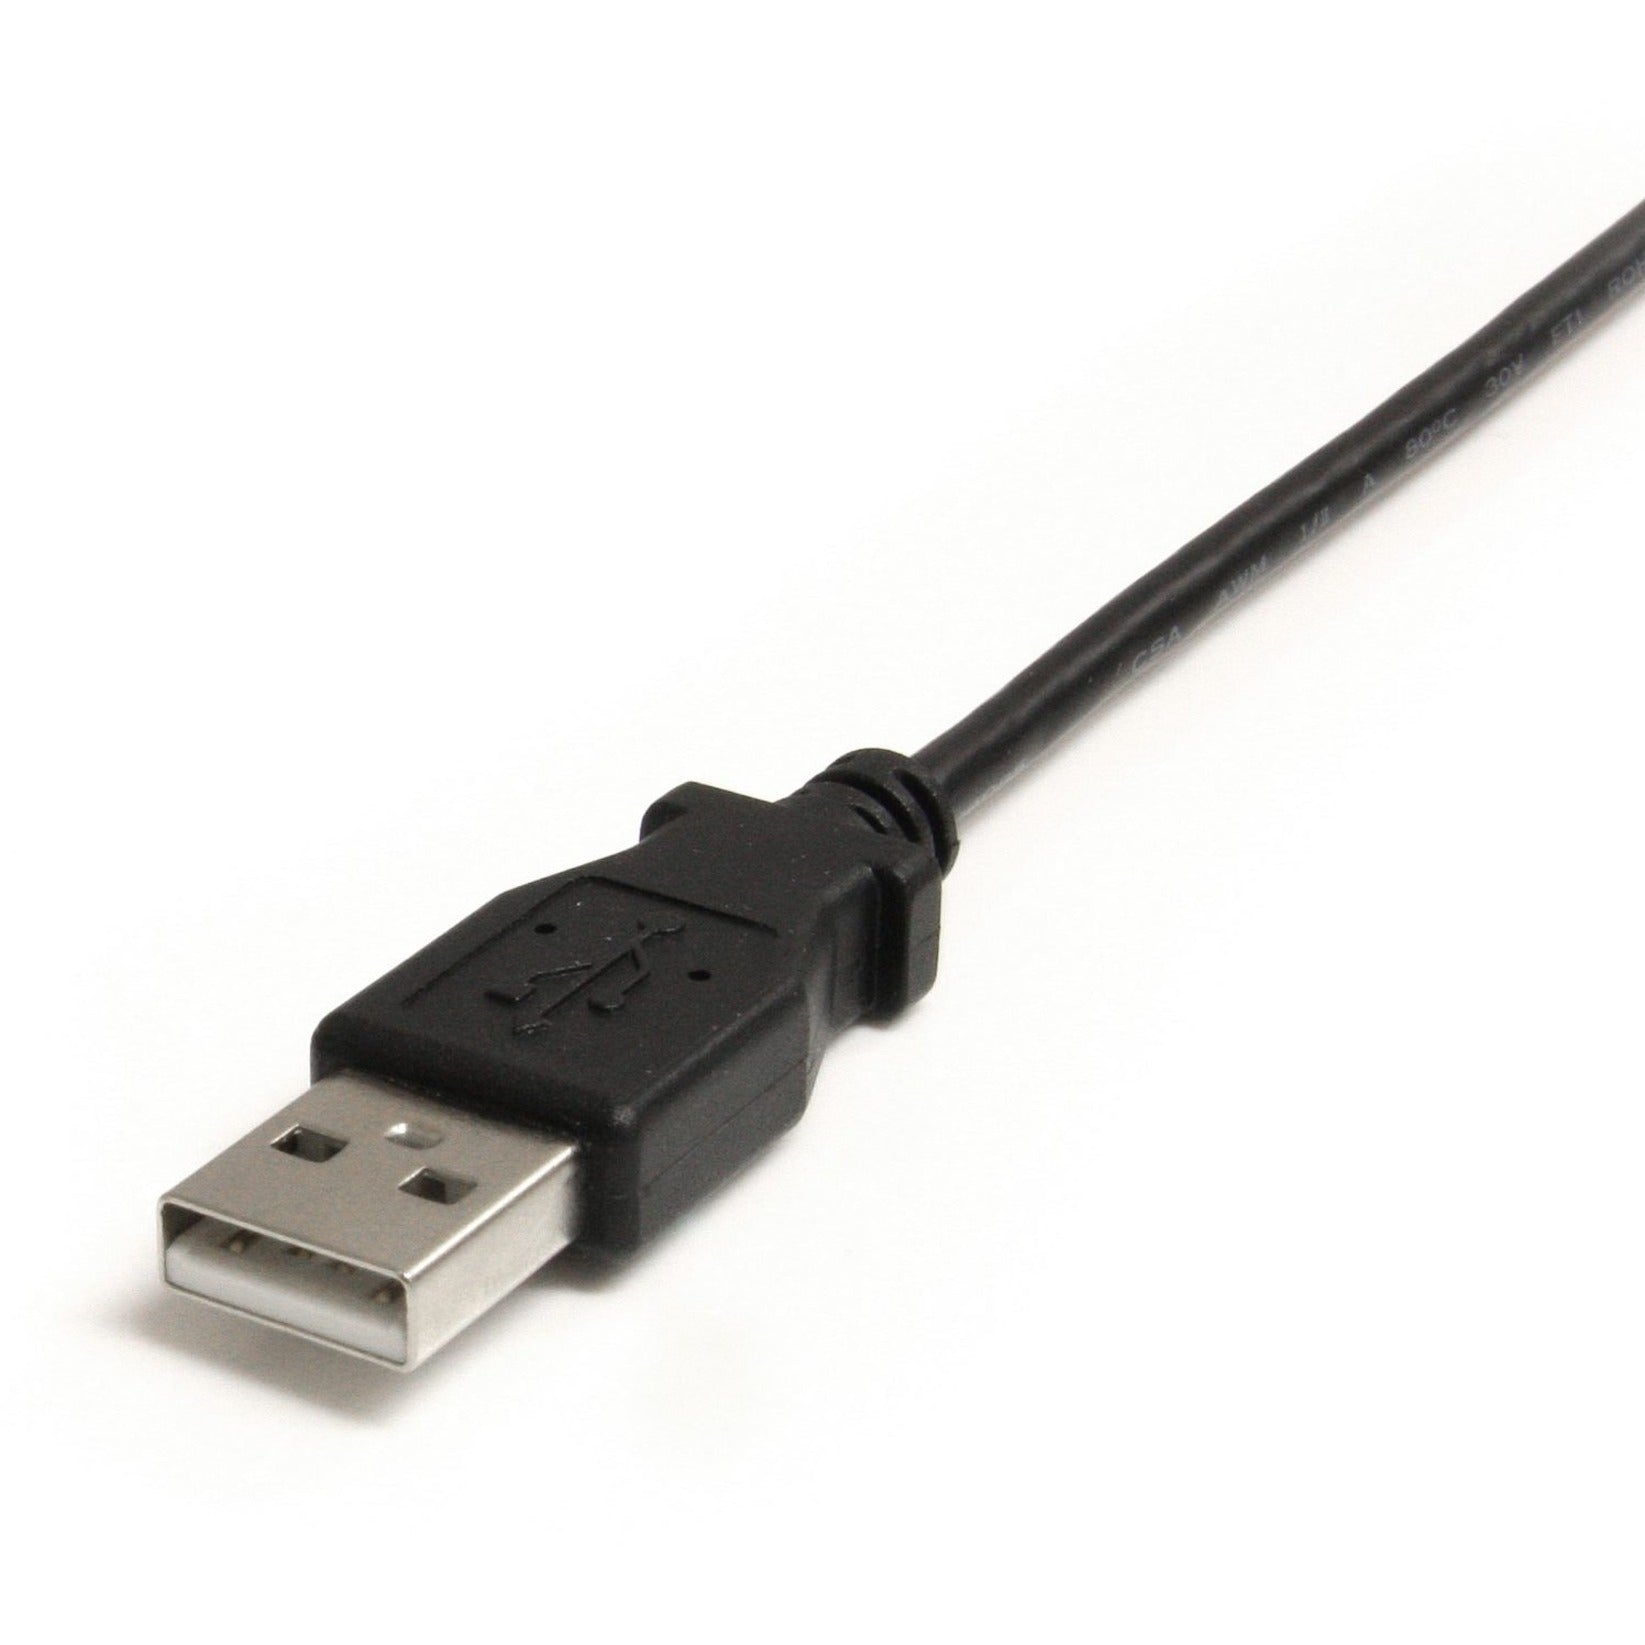 StarTech.com USB2HABM3RA 3 ft Mini USB Cable - A to Right Angle Mini B, Molded, Strain Relief, Charging